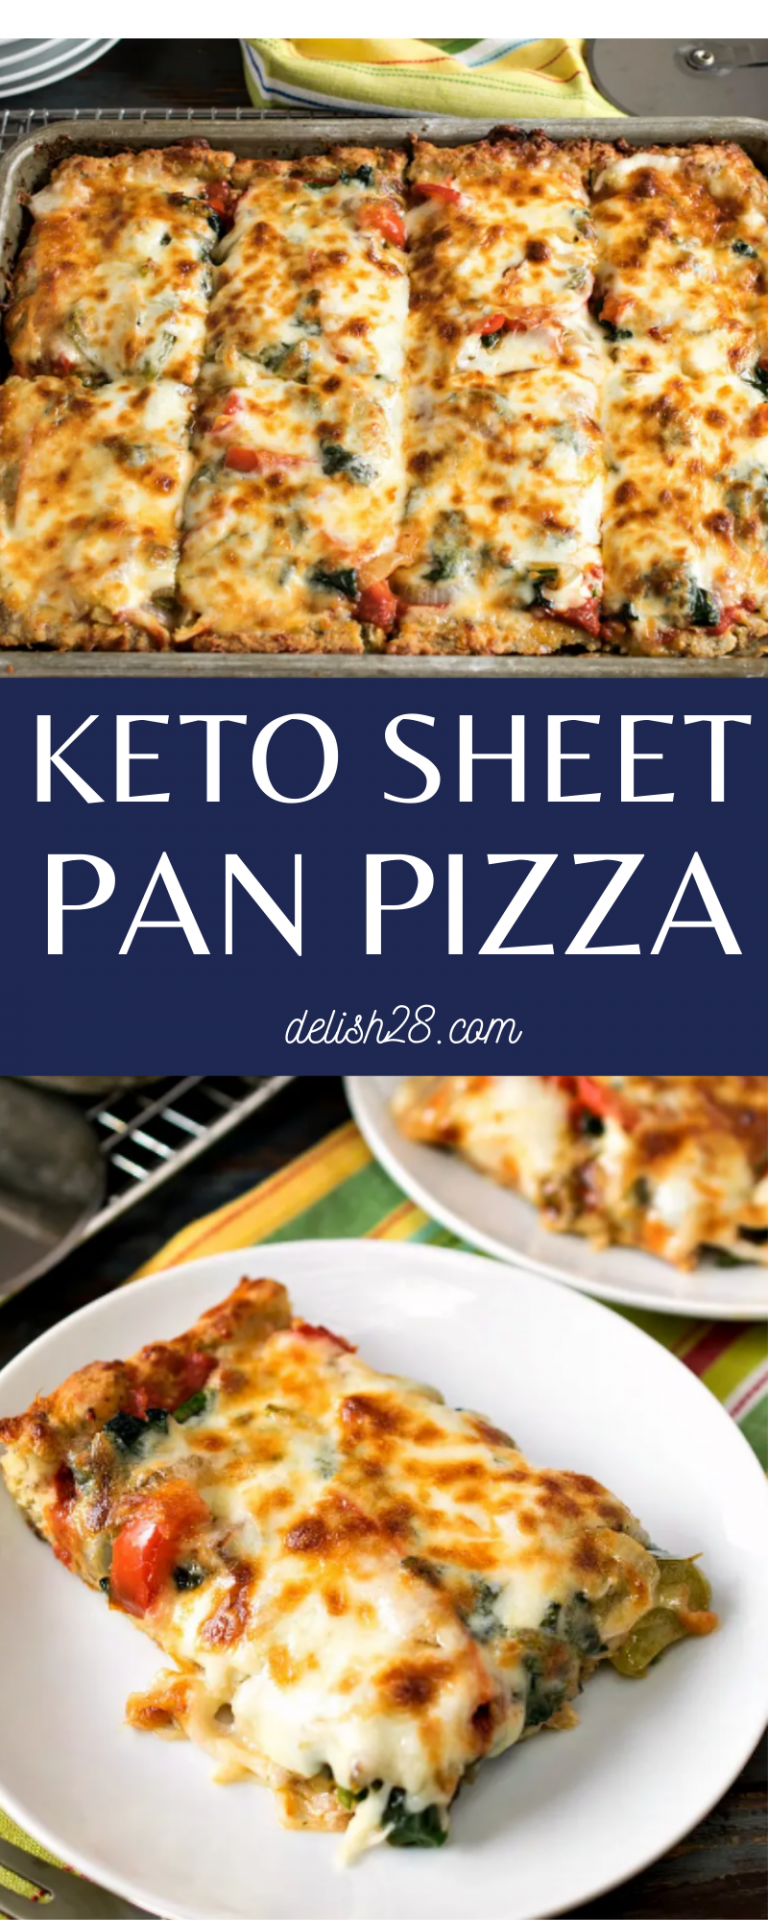 KETO SHEET PAN PIZZA - DELISH28.COM